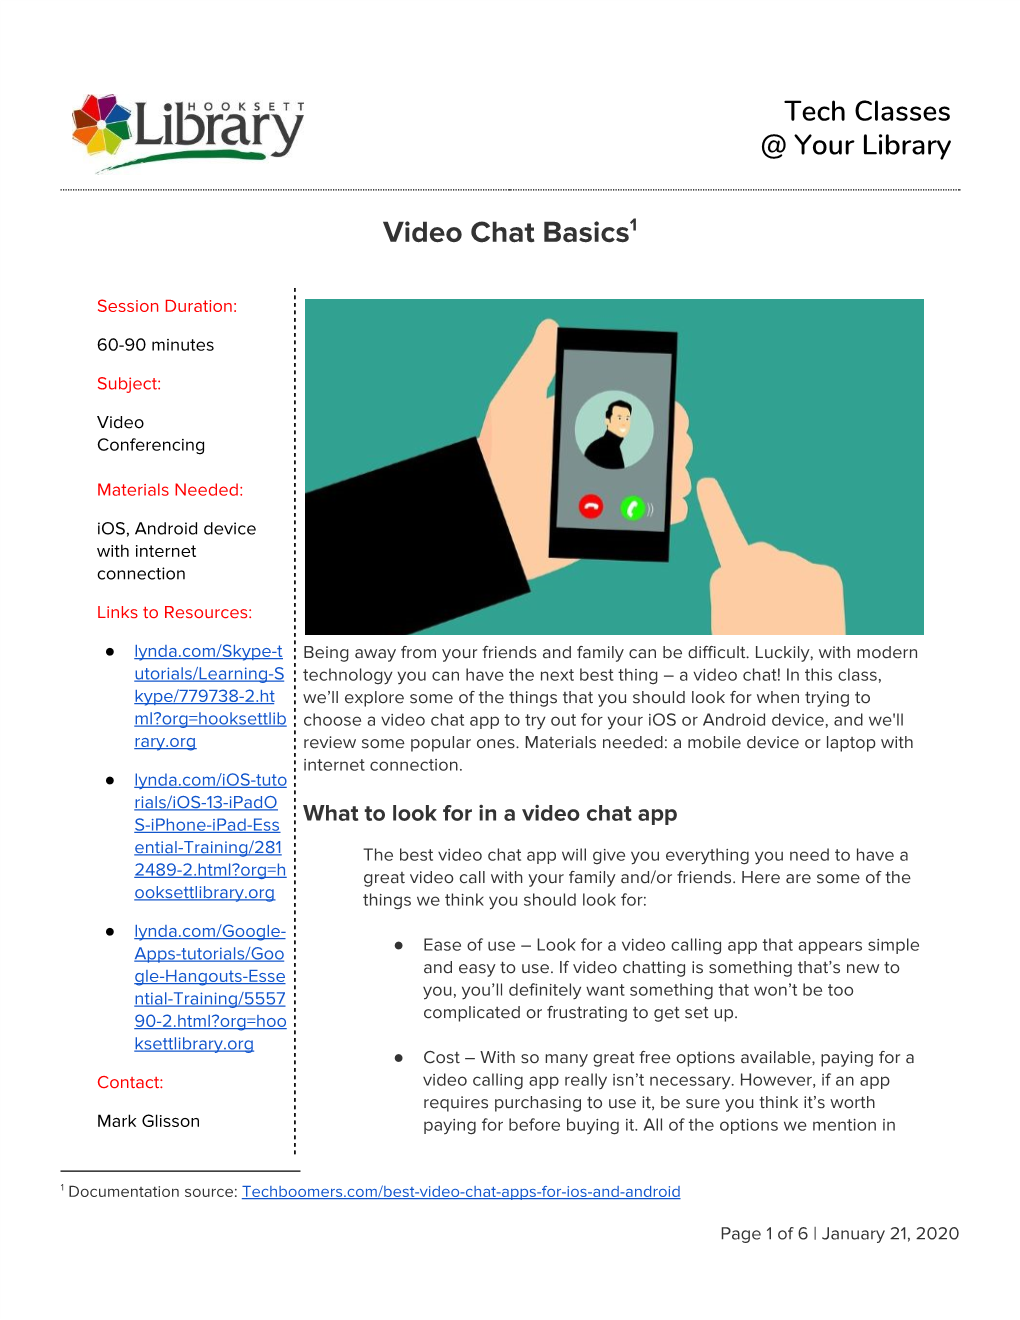 Video Chat Basics 1